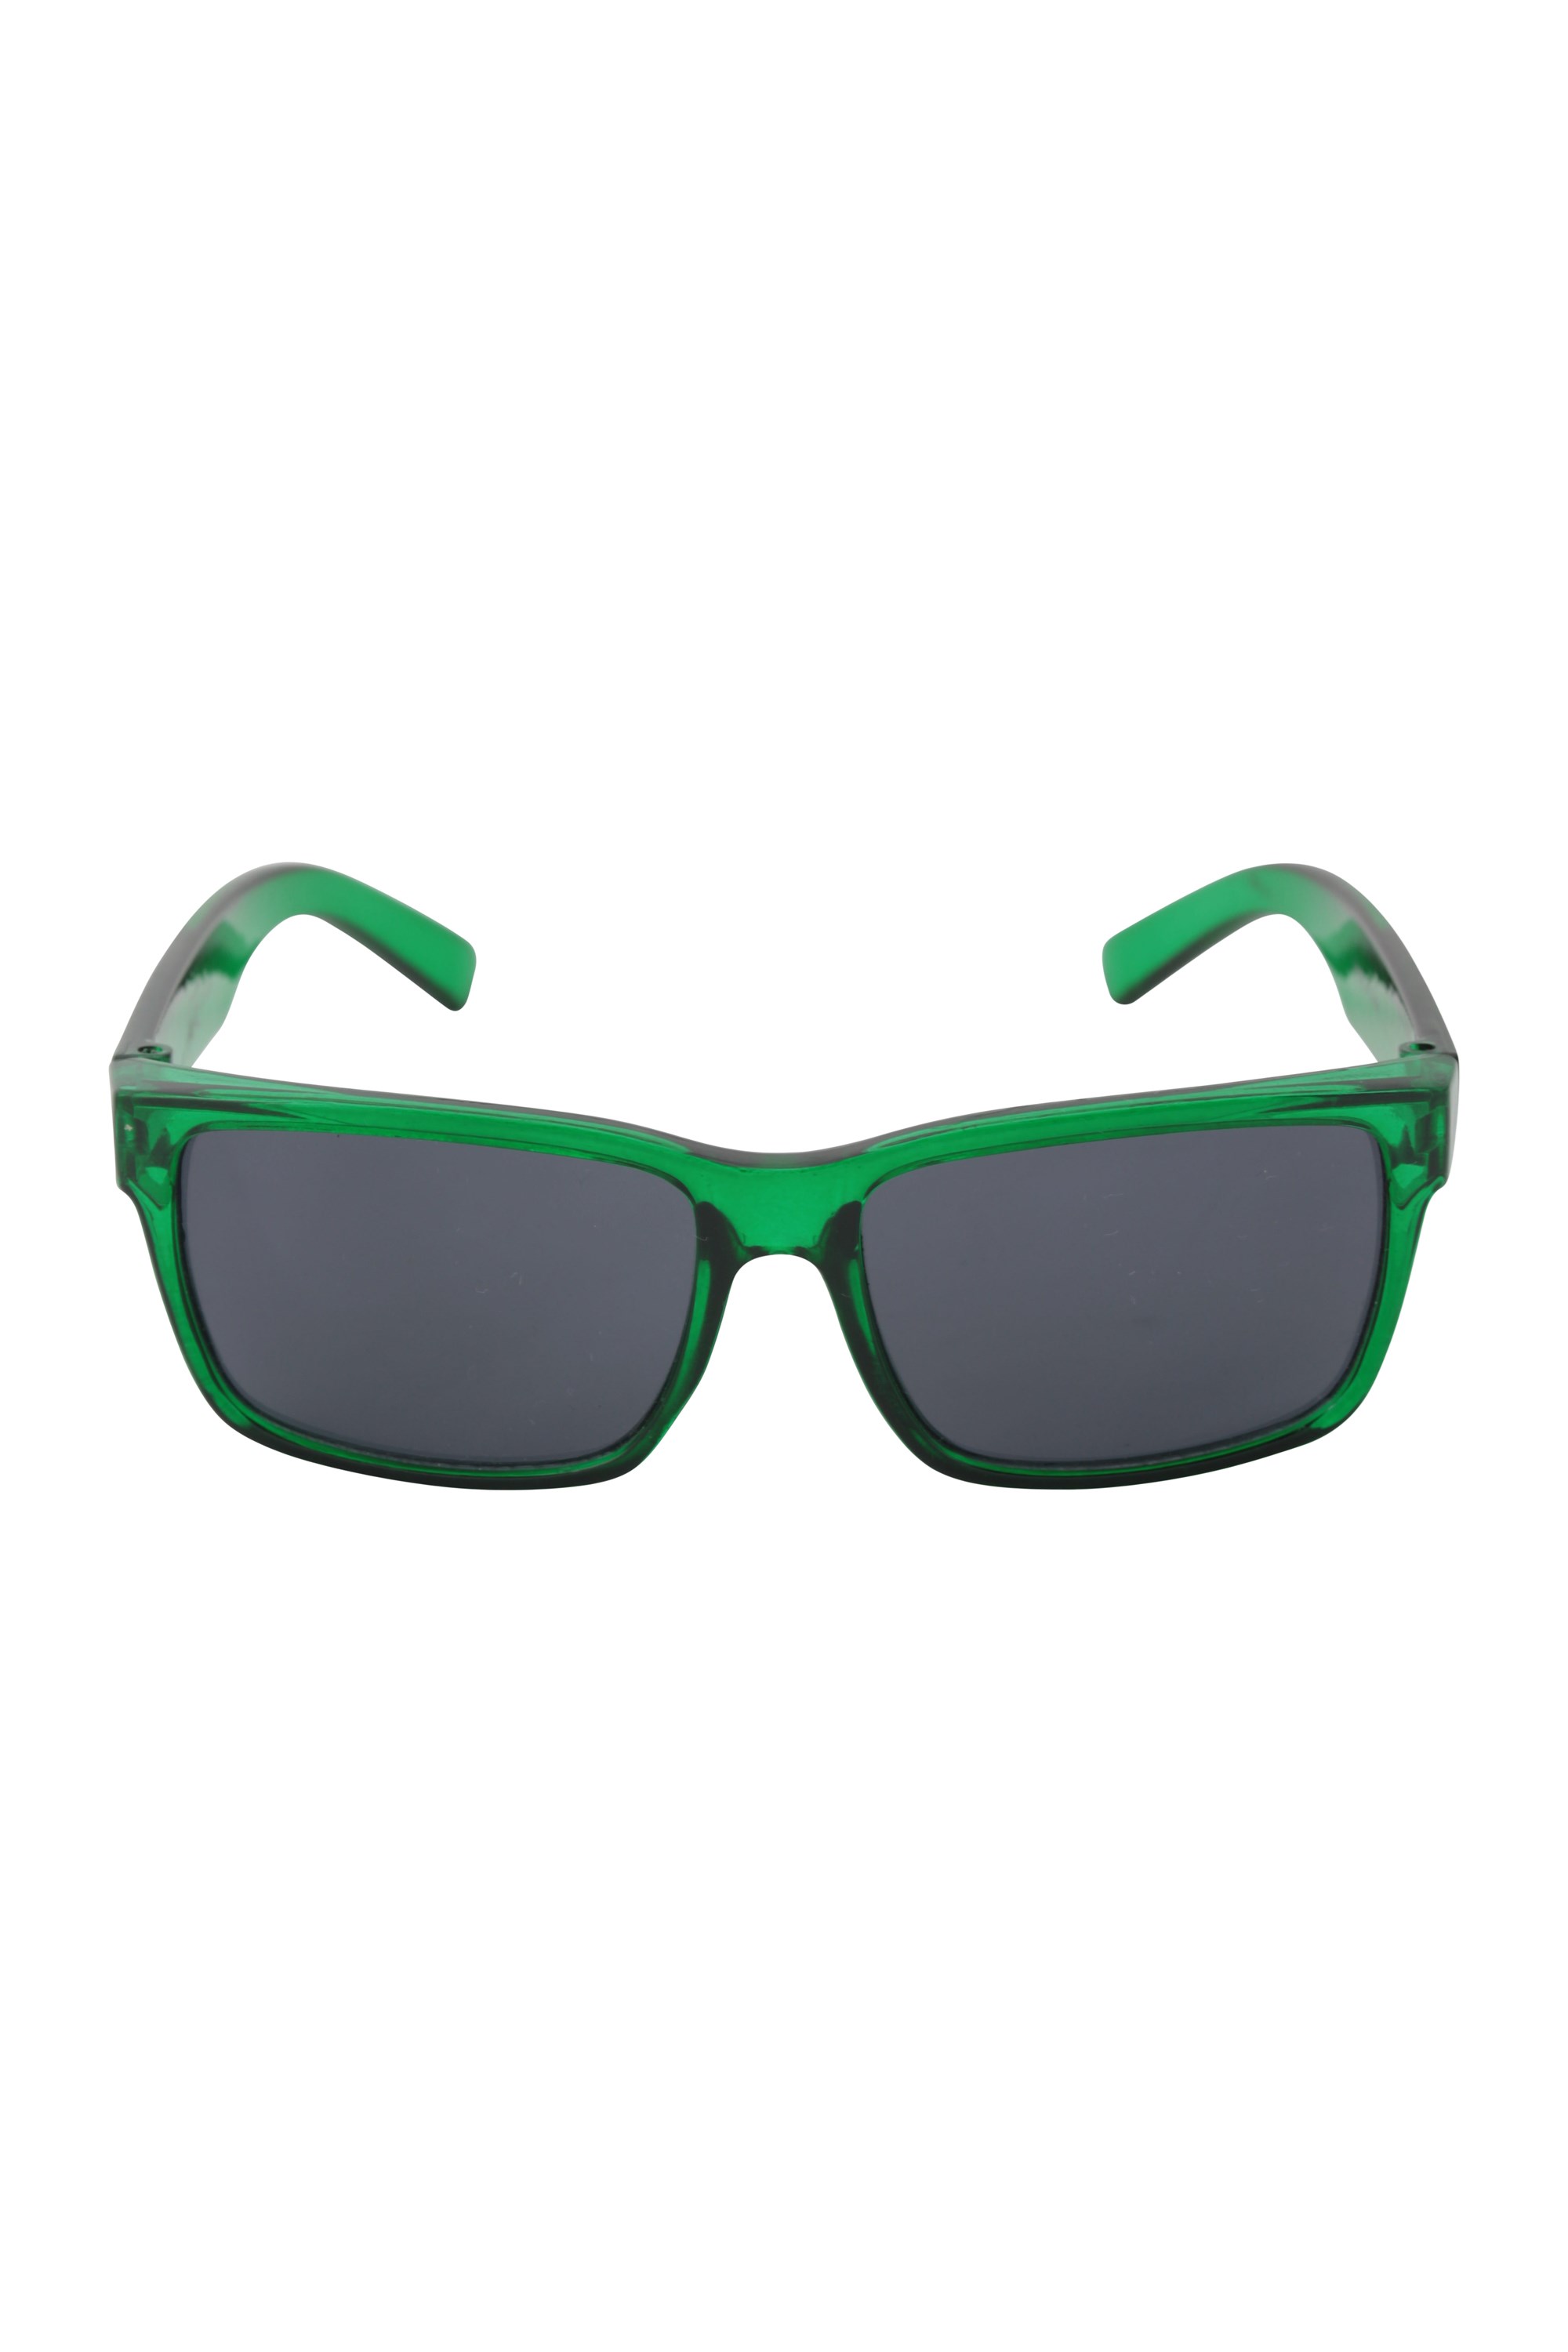 Mountain Warehouse Corfu Kids Sunglasses Green